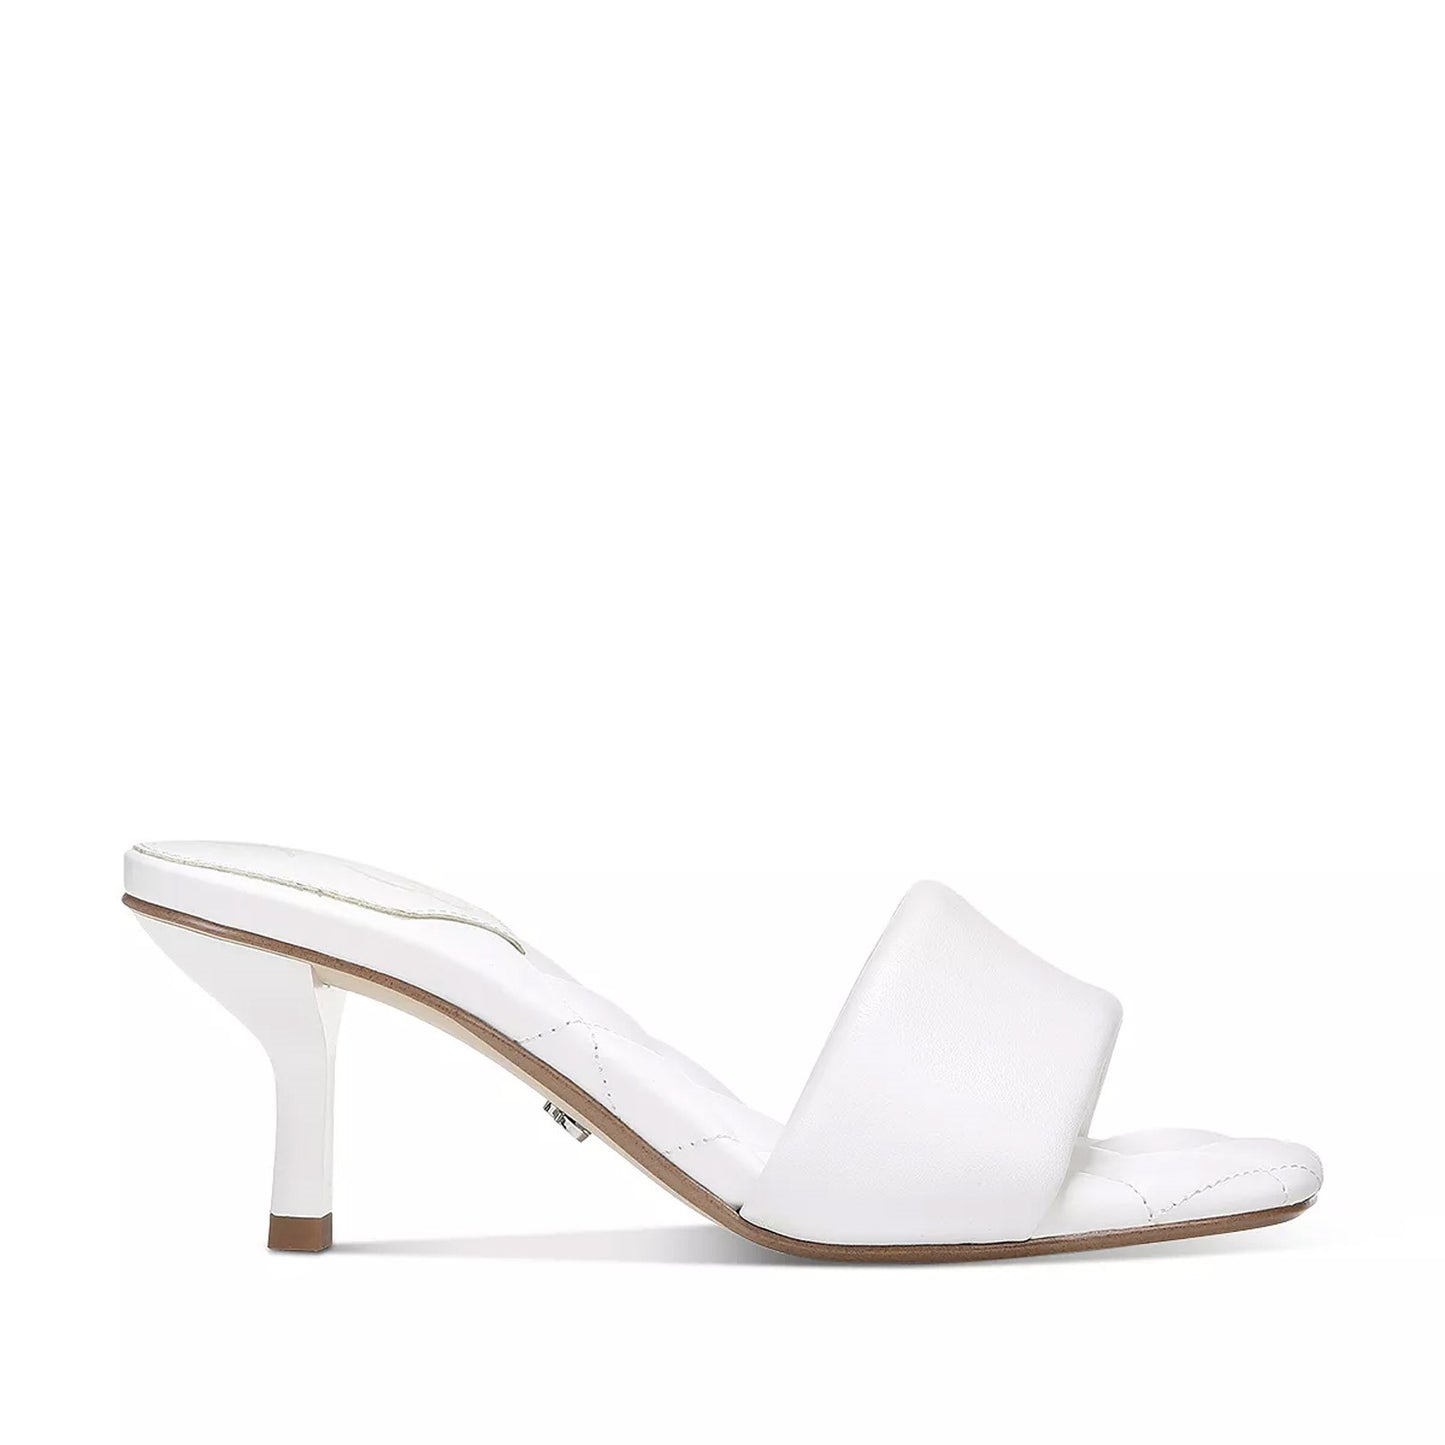 Peltz Shoes  Women's Sam Edelman Starla Sandal WHITE I0407L1100